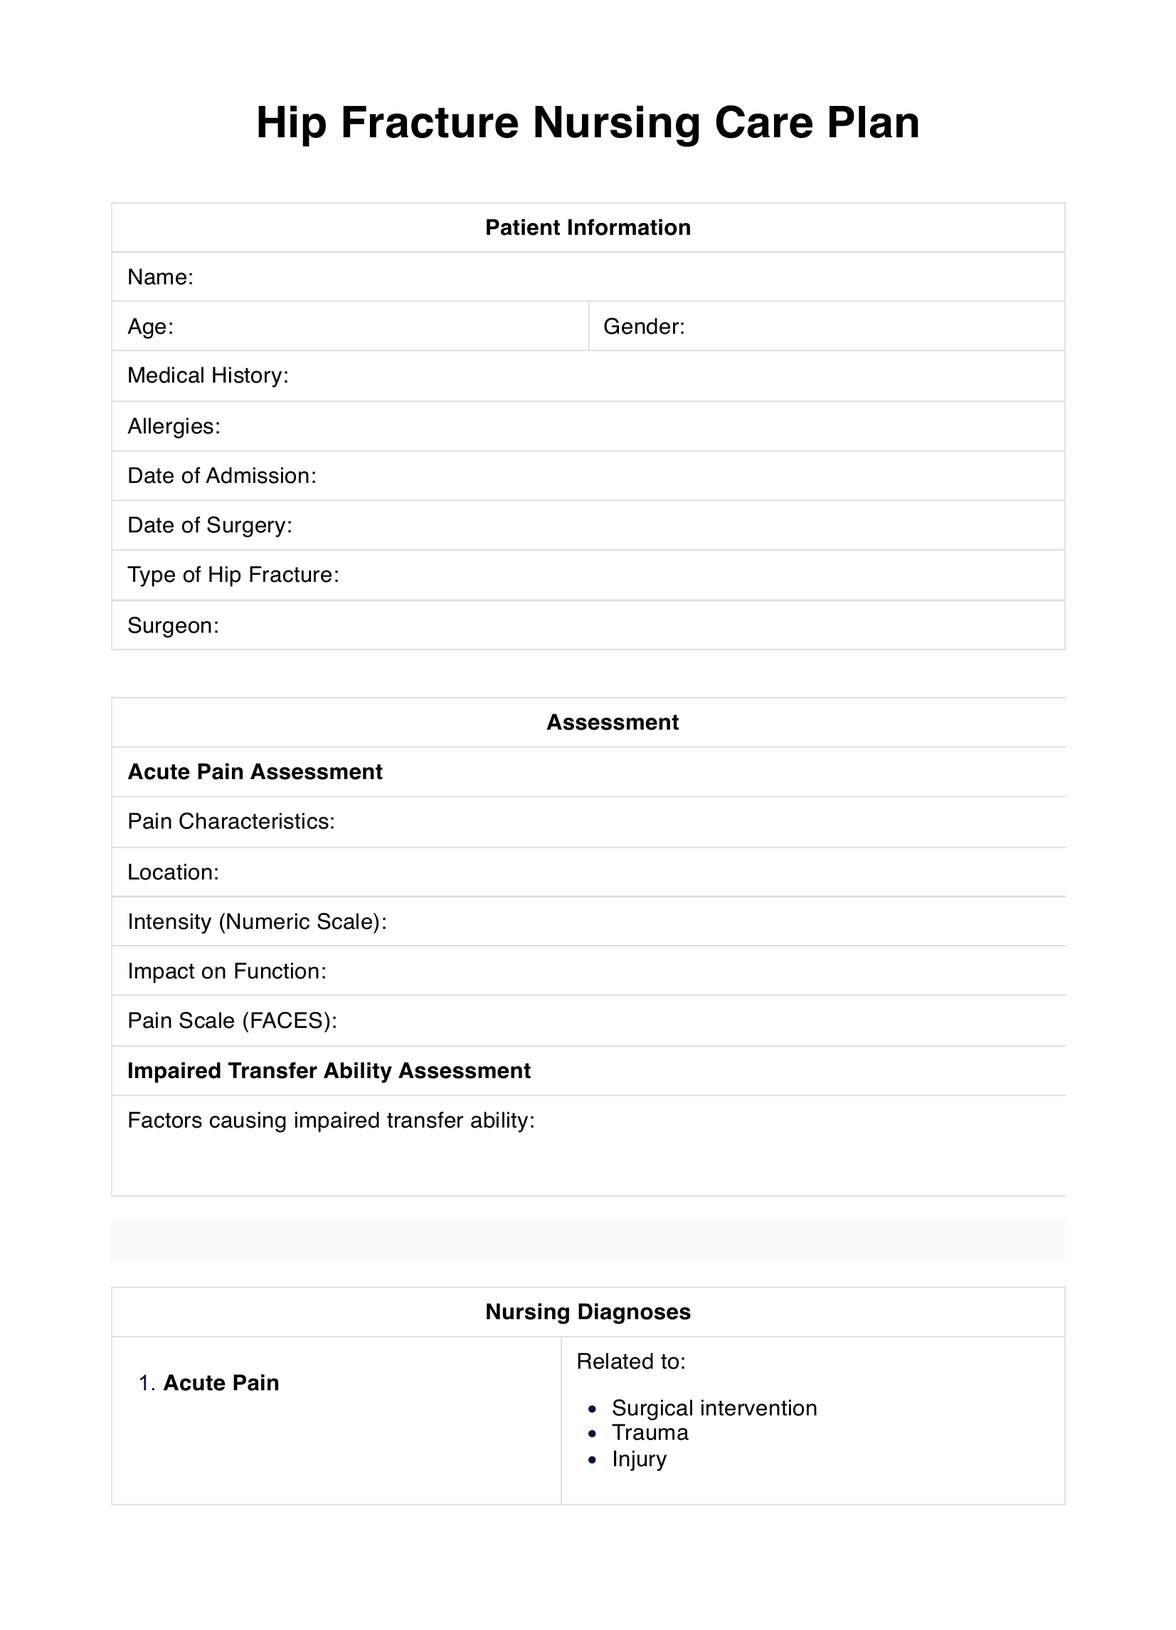 Hip Fracture Nursing Care Plan PDF Example